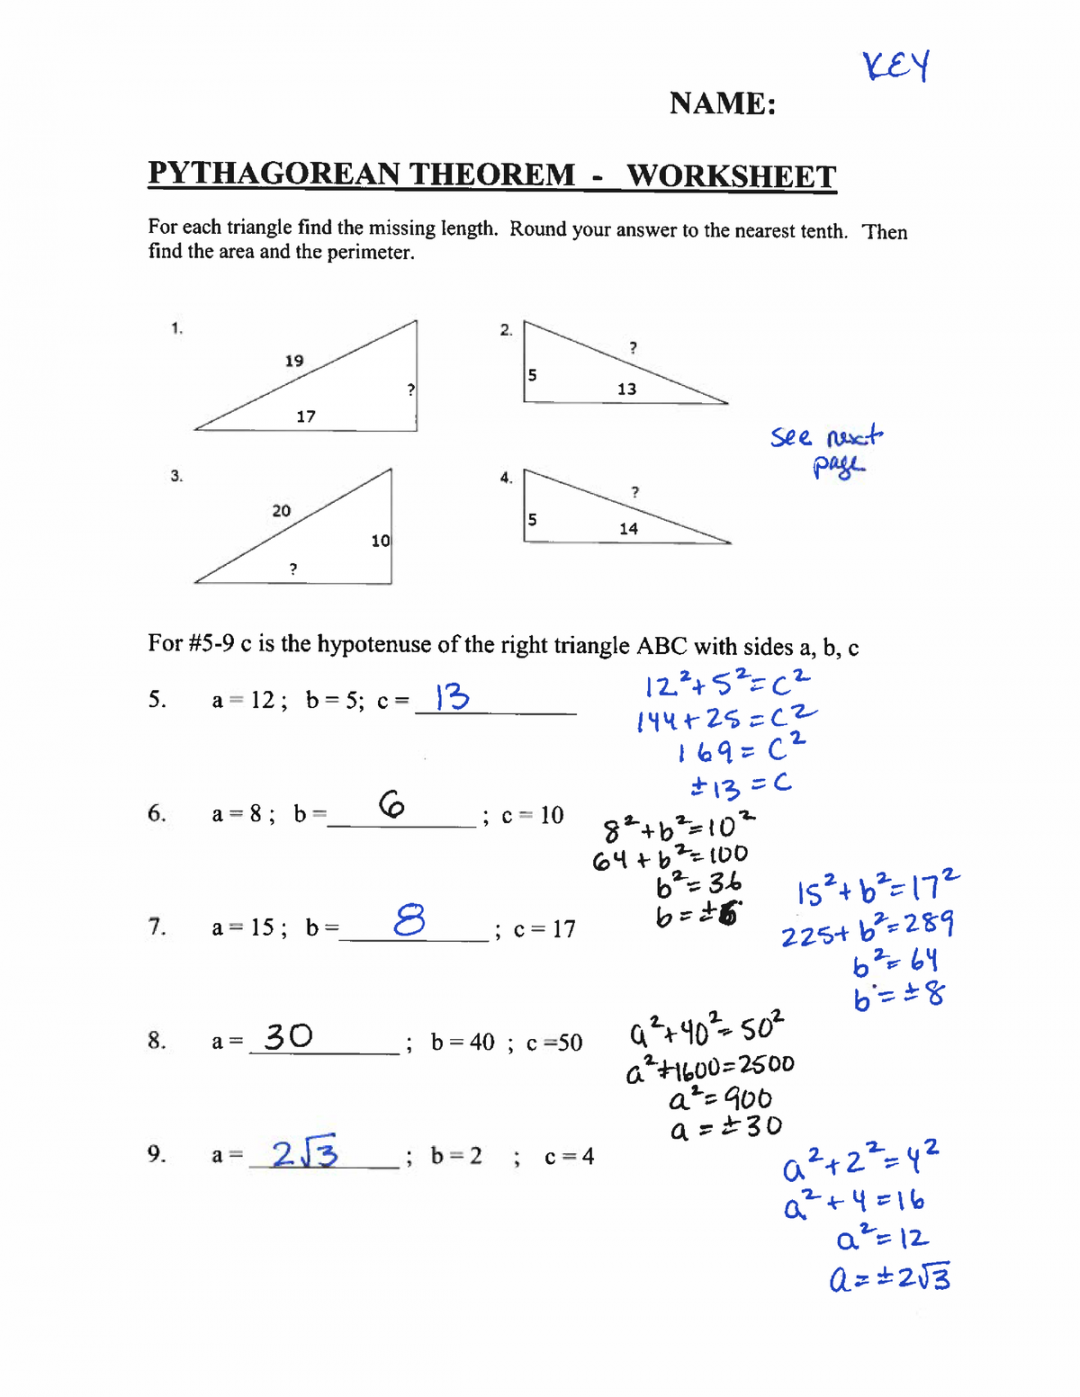 Pythagorean Theorem Worksheet answer KEY - Studocu